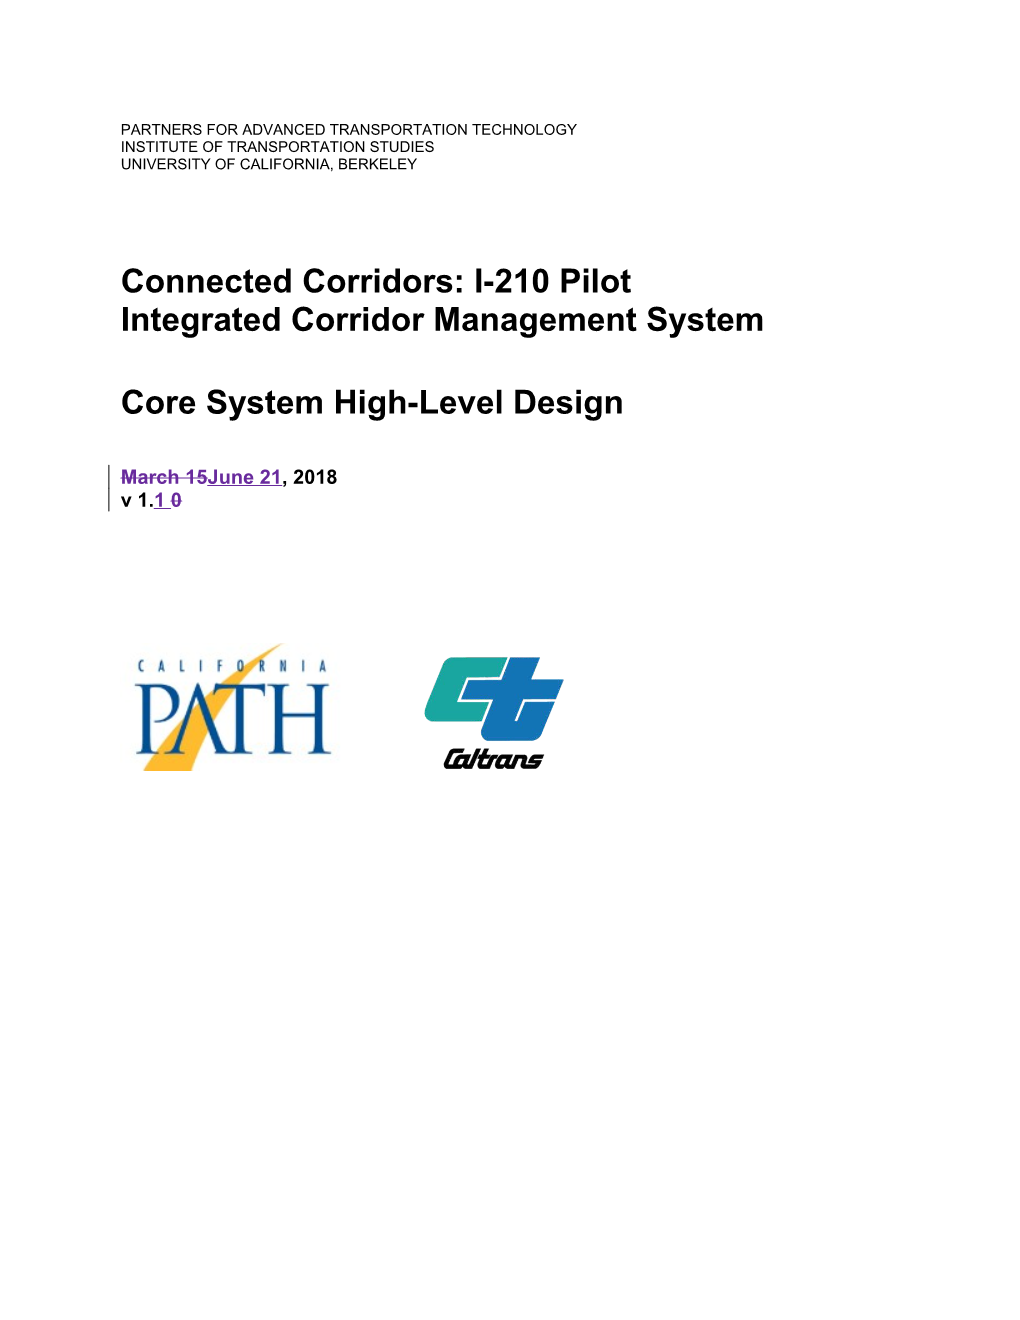 I-210 Pilot: Core System High-Level Design